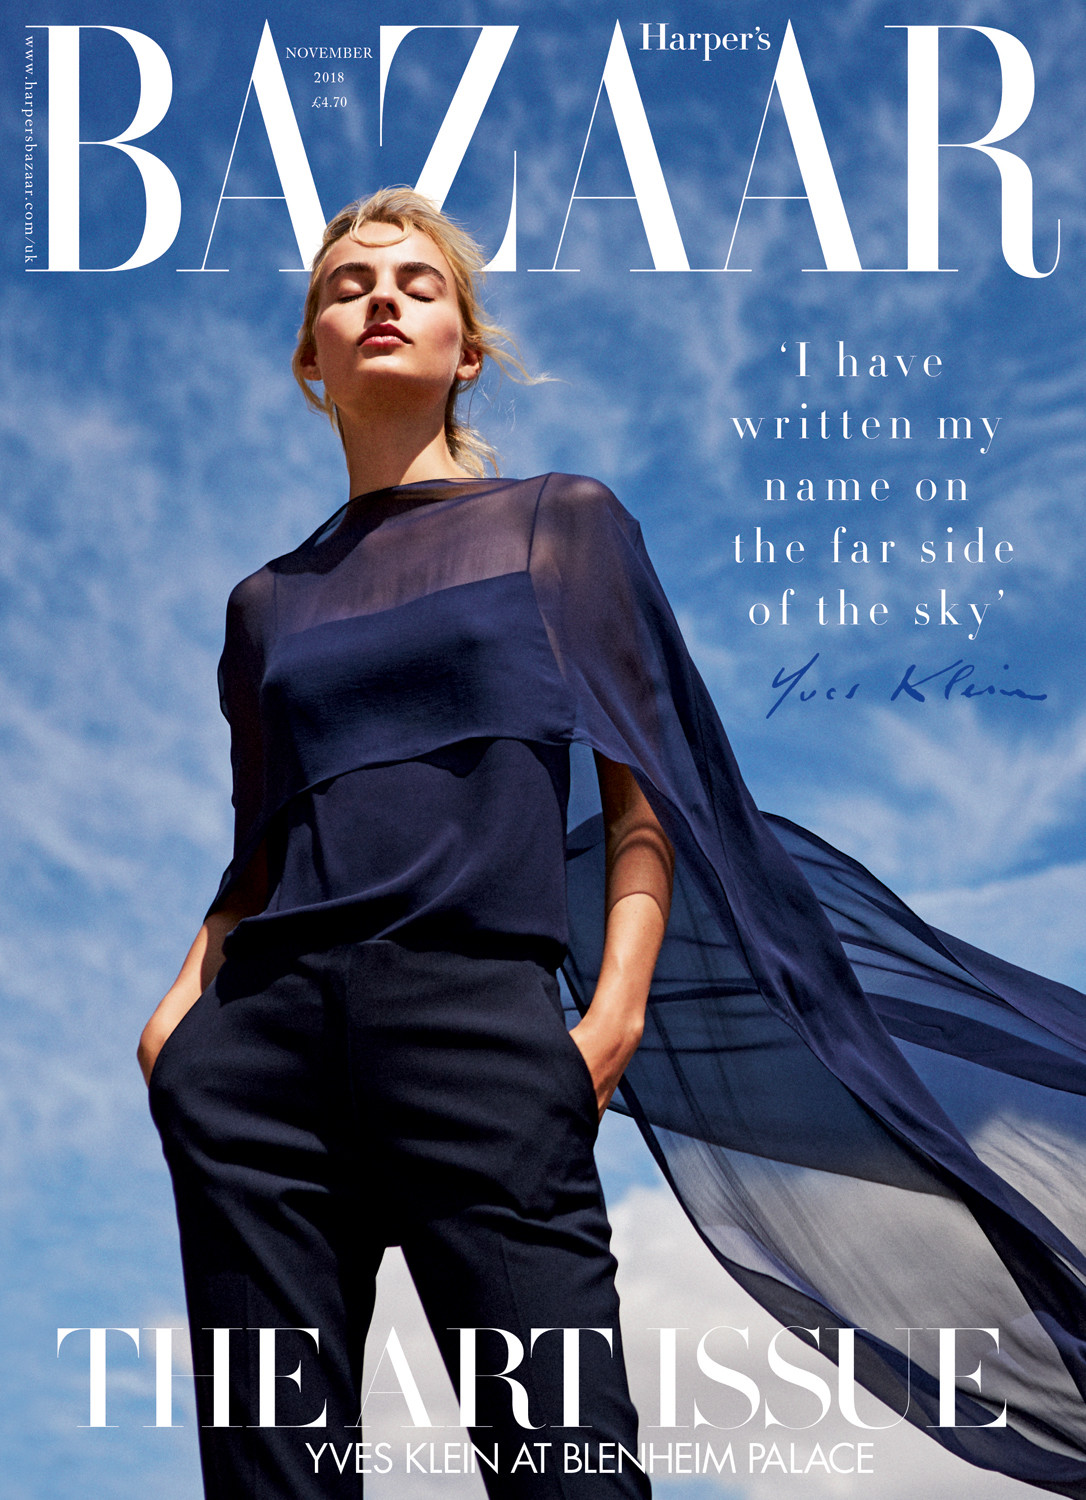 Harper's Bazaar Uk November 2018 Cover Story Editorial